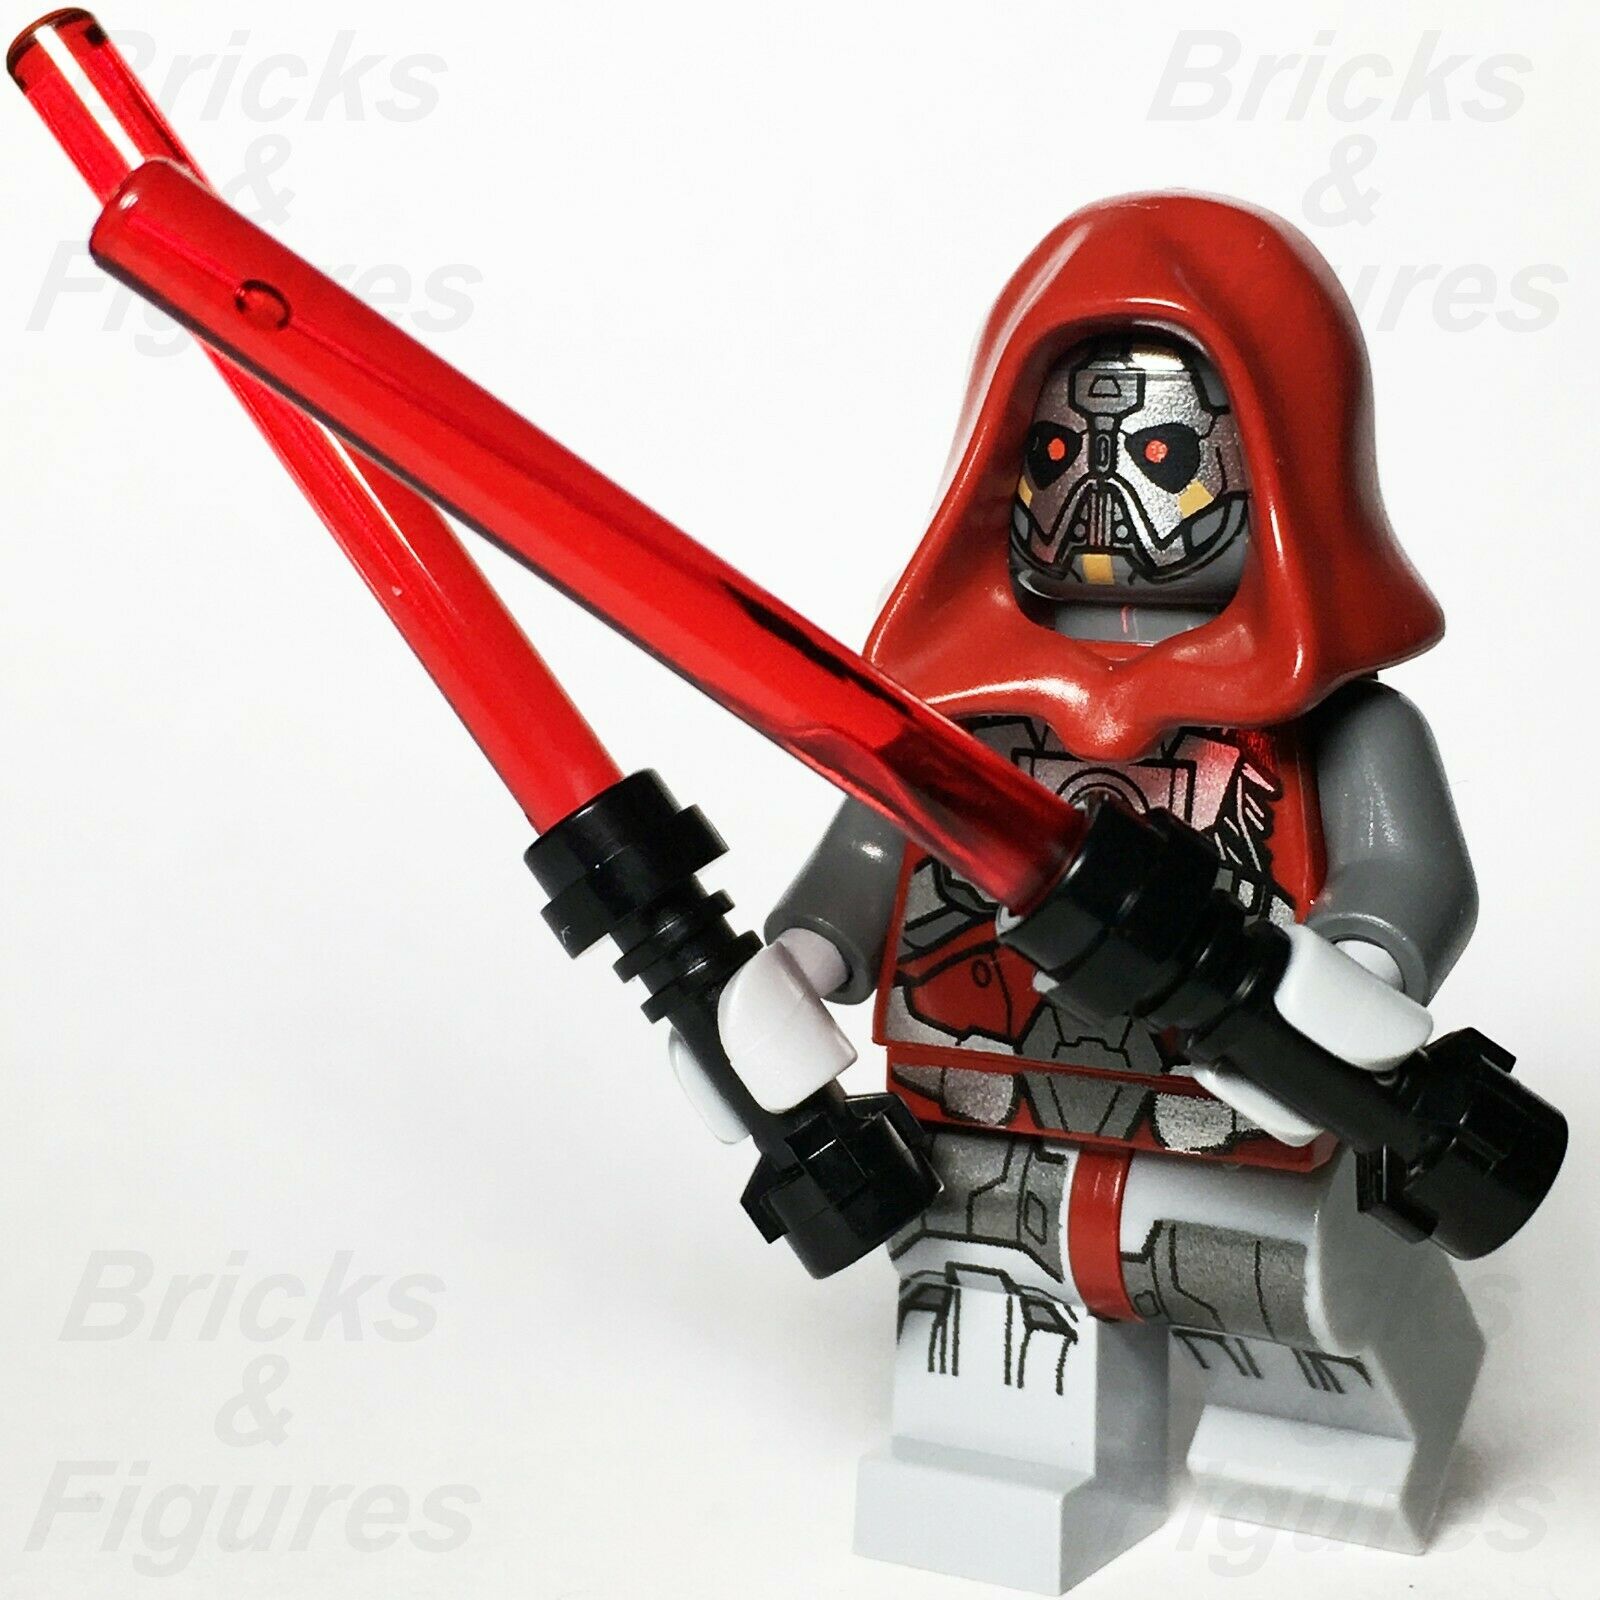 New Star Wars LEGO Sith Warrior Lord The Old Republic Minifigure 75025 - Bricks & Figures